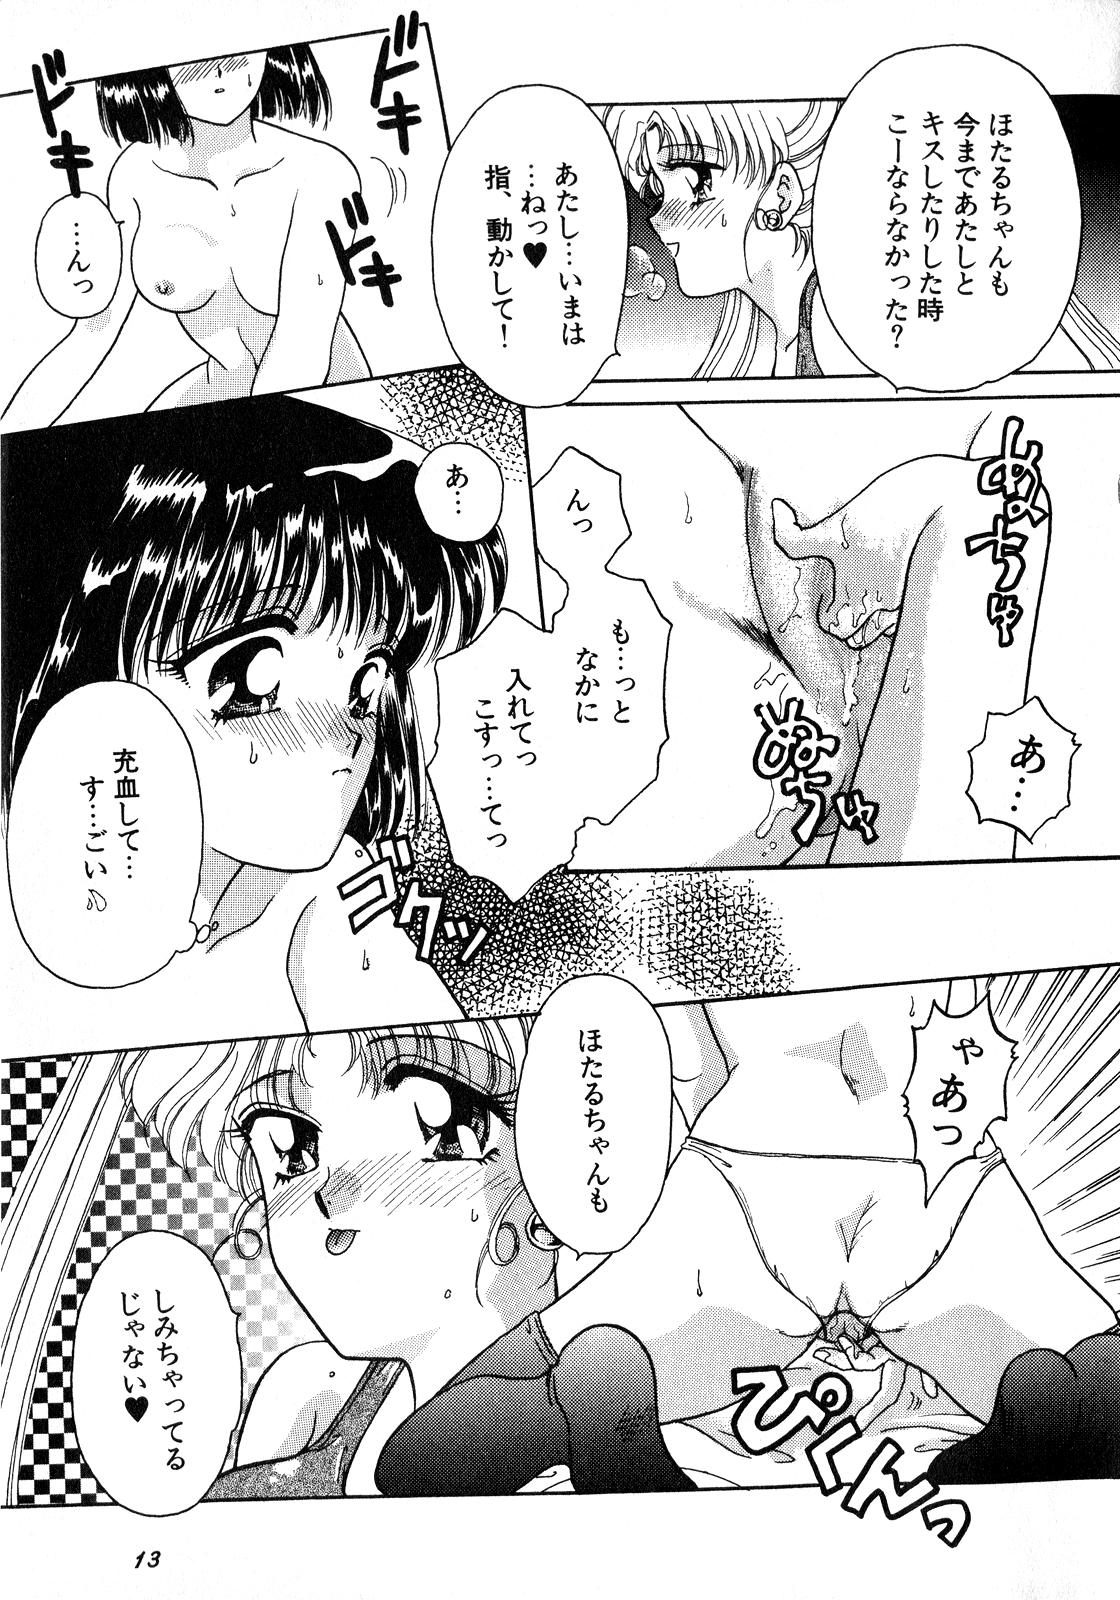 Bisexual Lunatic Party 8 - Sailor moon Coroa - Page 14